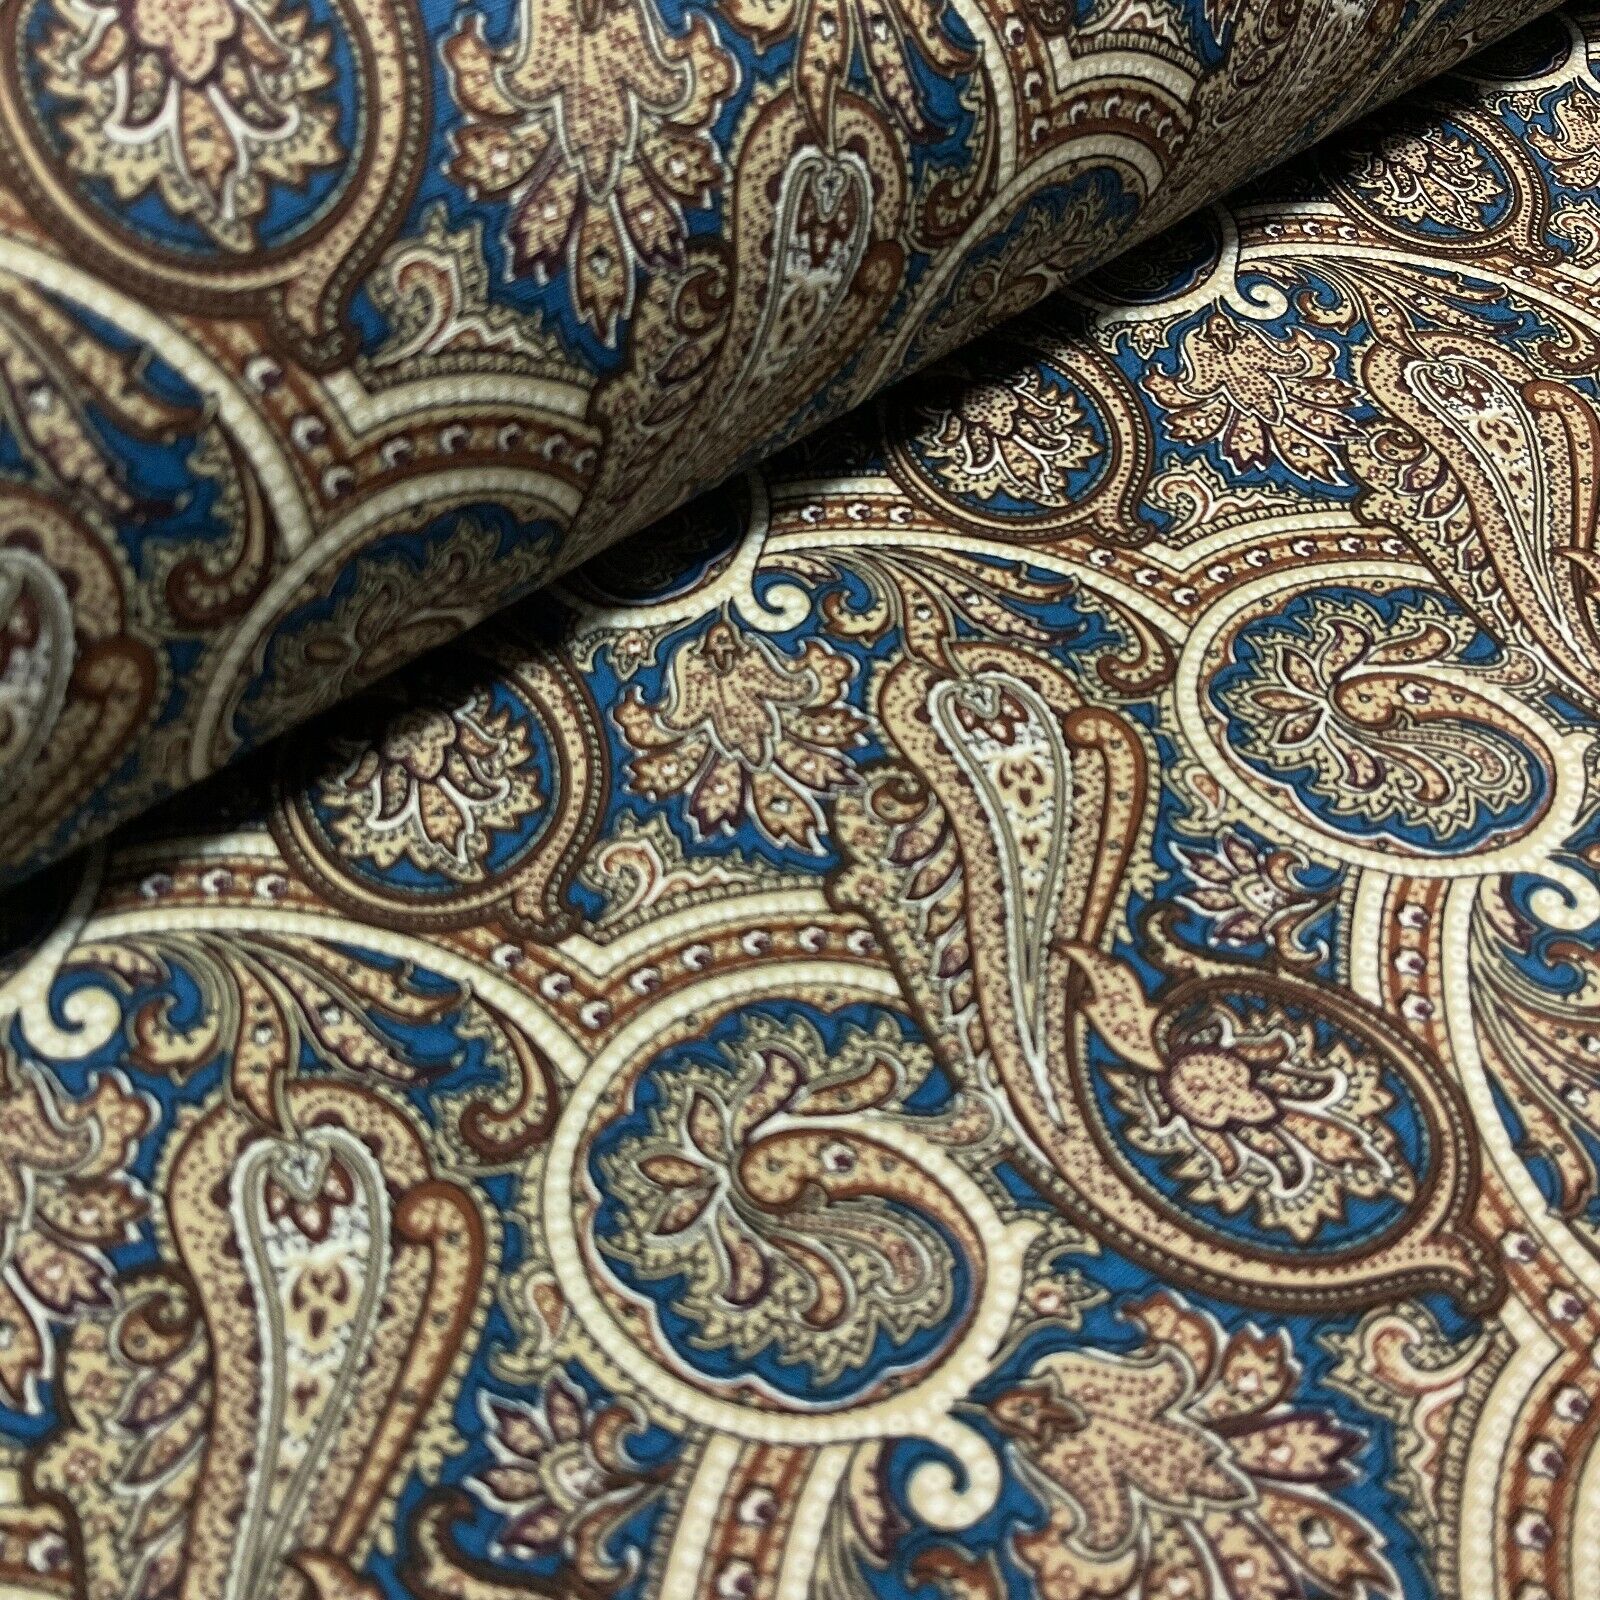 Vintage Paisley 100% cotton poplin printed dress craft fabric 112cm wide M1745